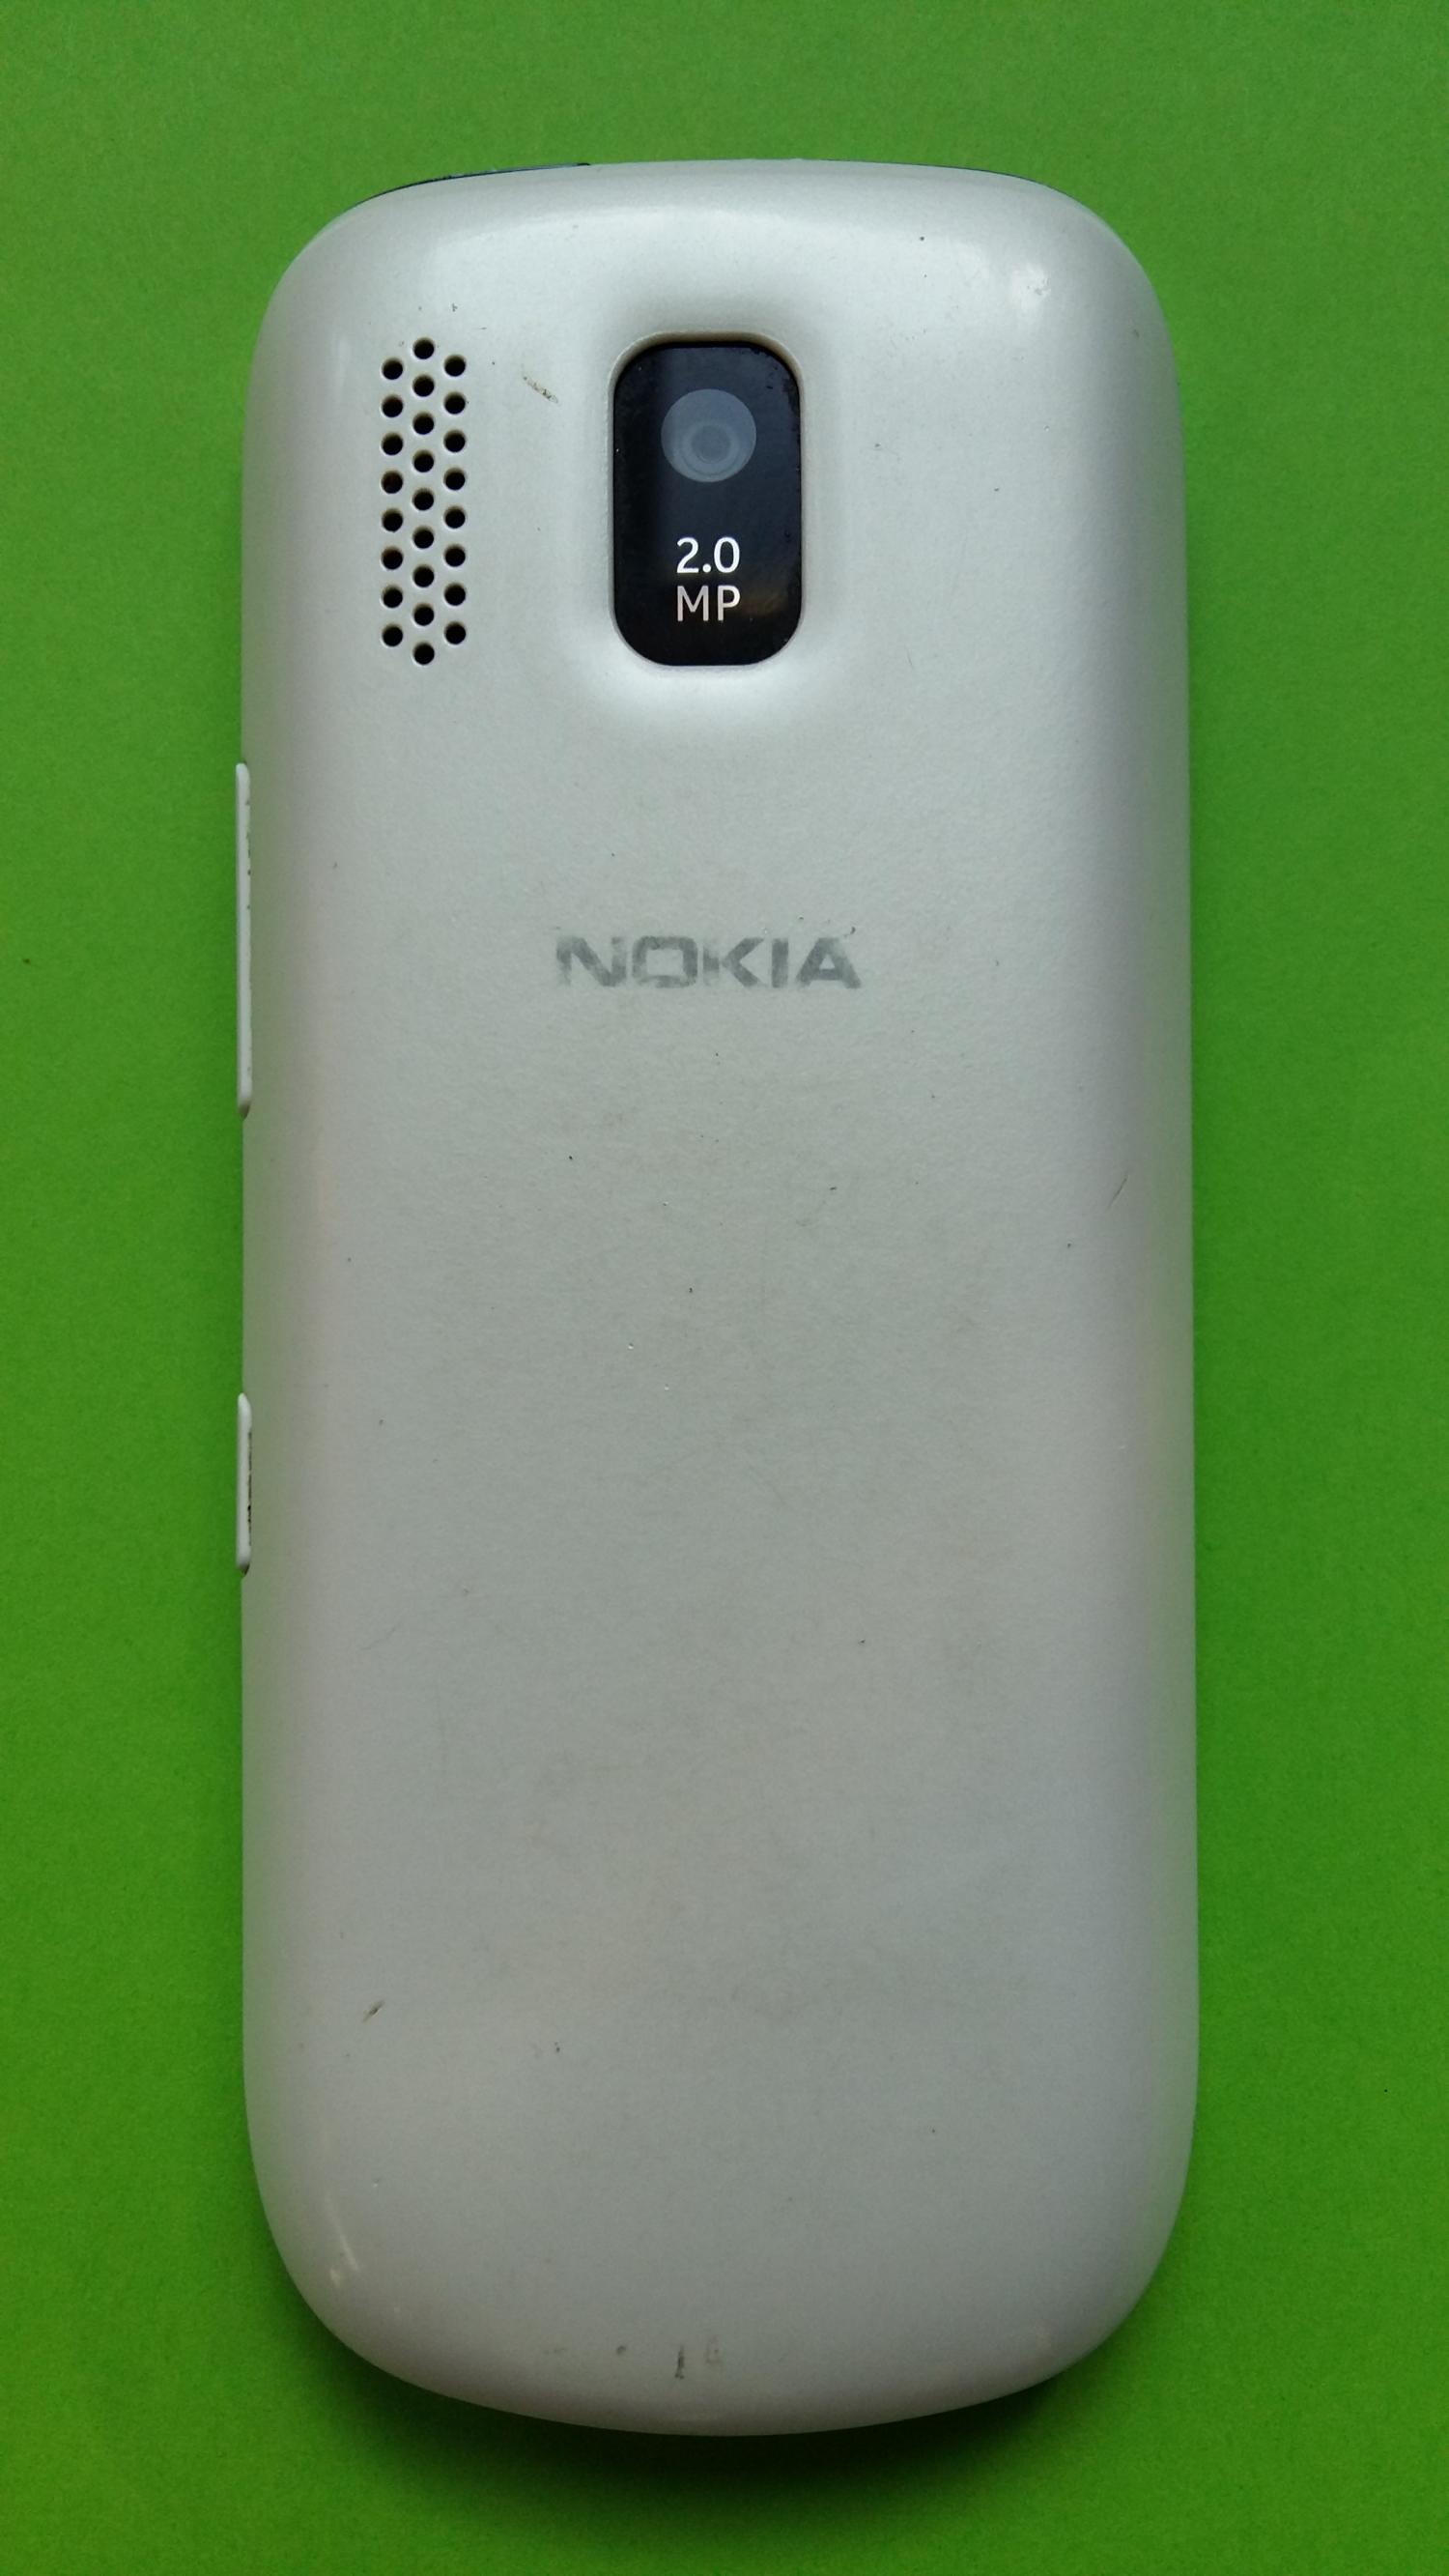 image-7299048-Nokia 203 Asha (1)2.jpg